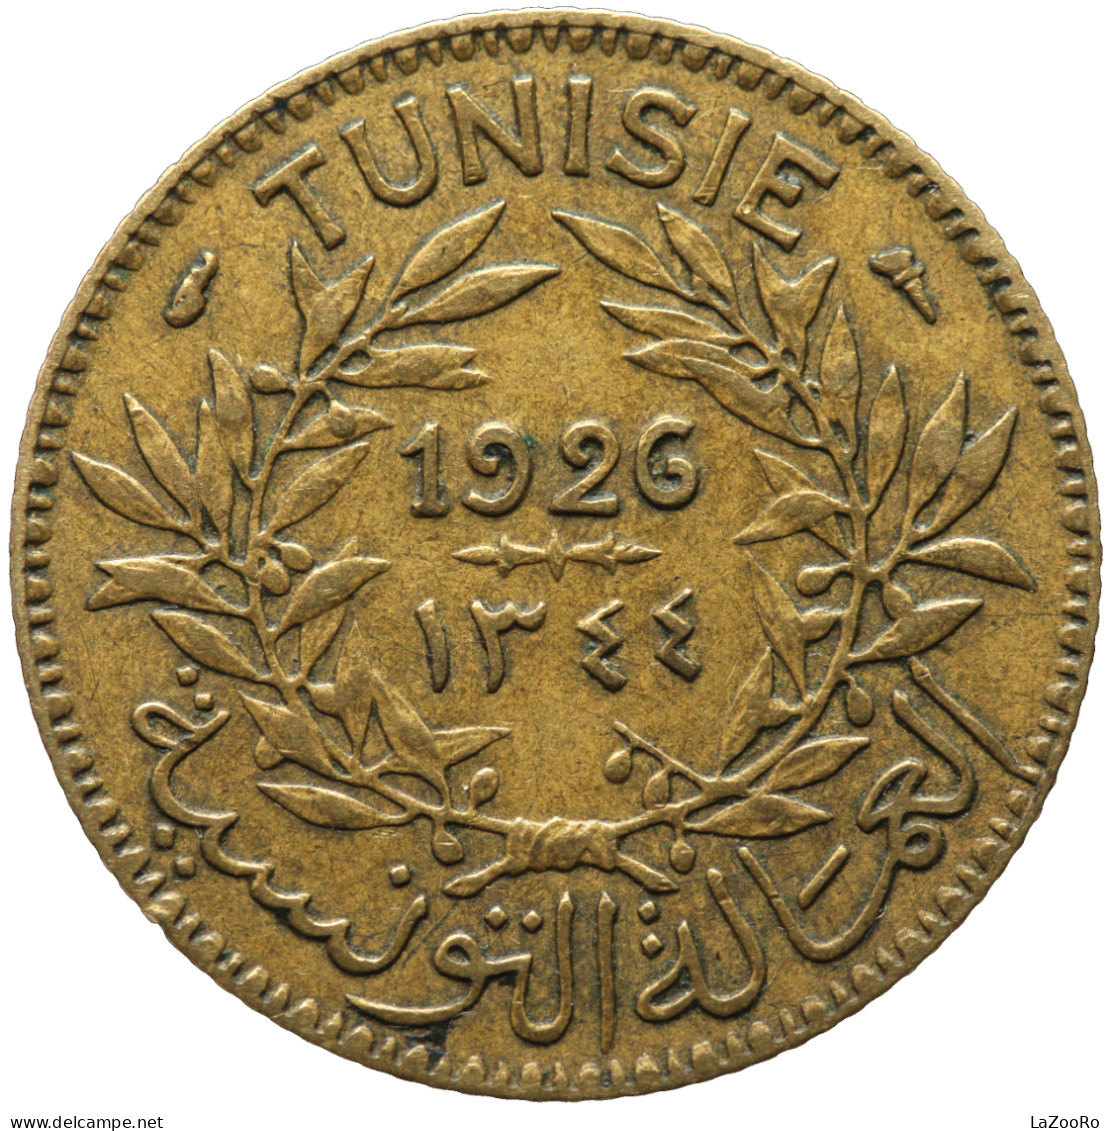 LaZooRo: Tunisia 1 Franc 1926 1344 XF - Tunesien